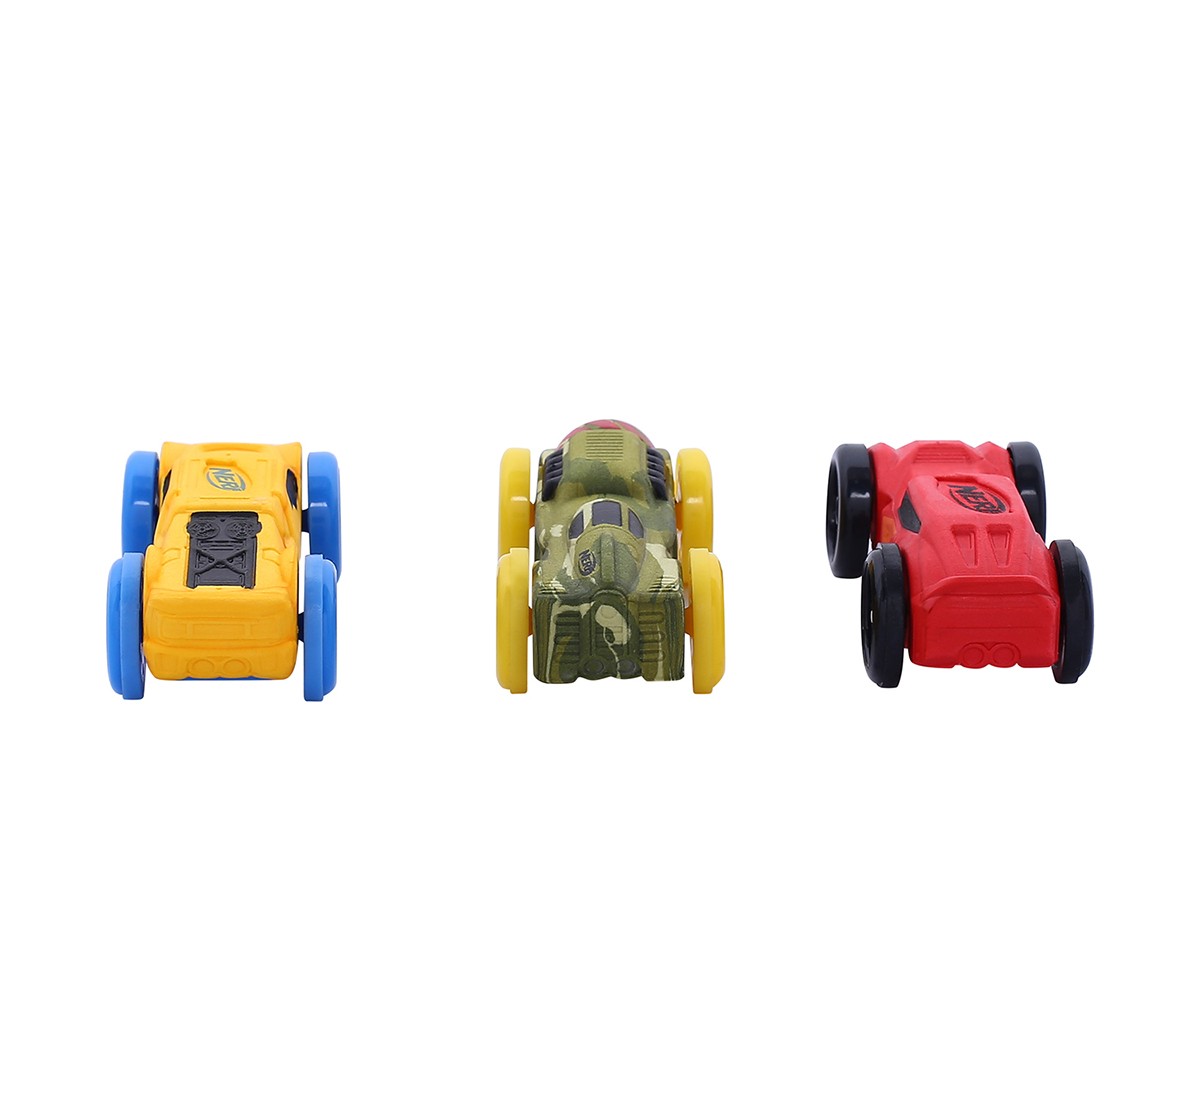 Nerf C0775 Nitro Foam Car (3-Pack) (Multicolour) Tracksets & Train Sets for Kids age 5Y+ 